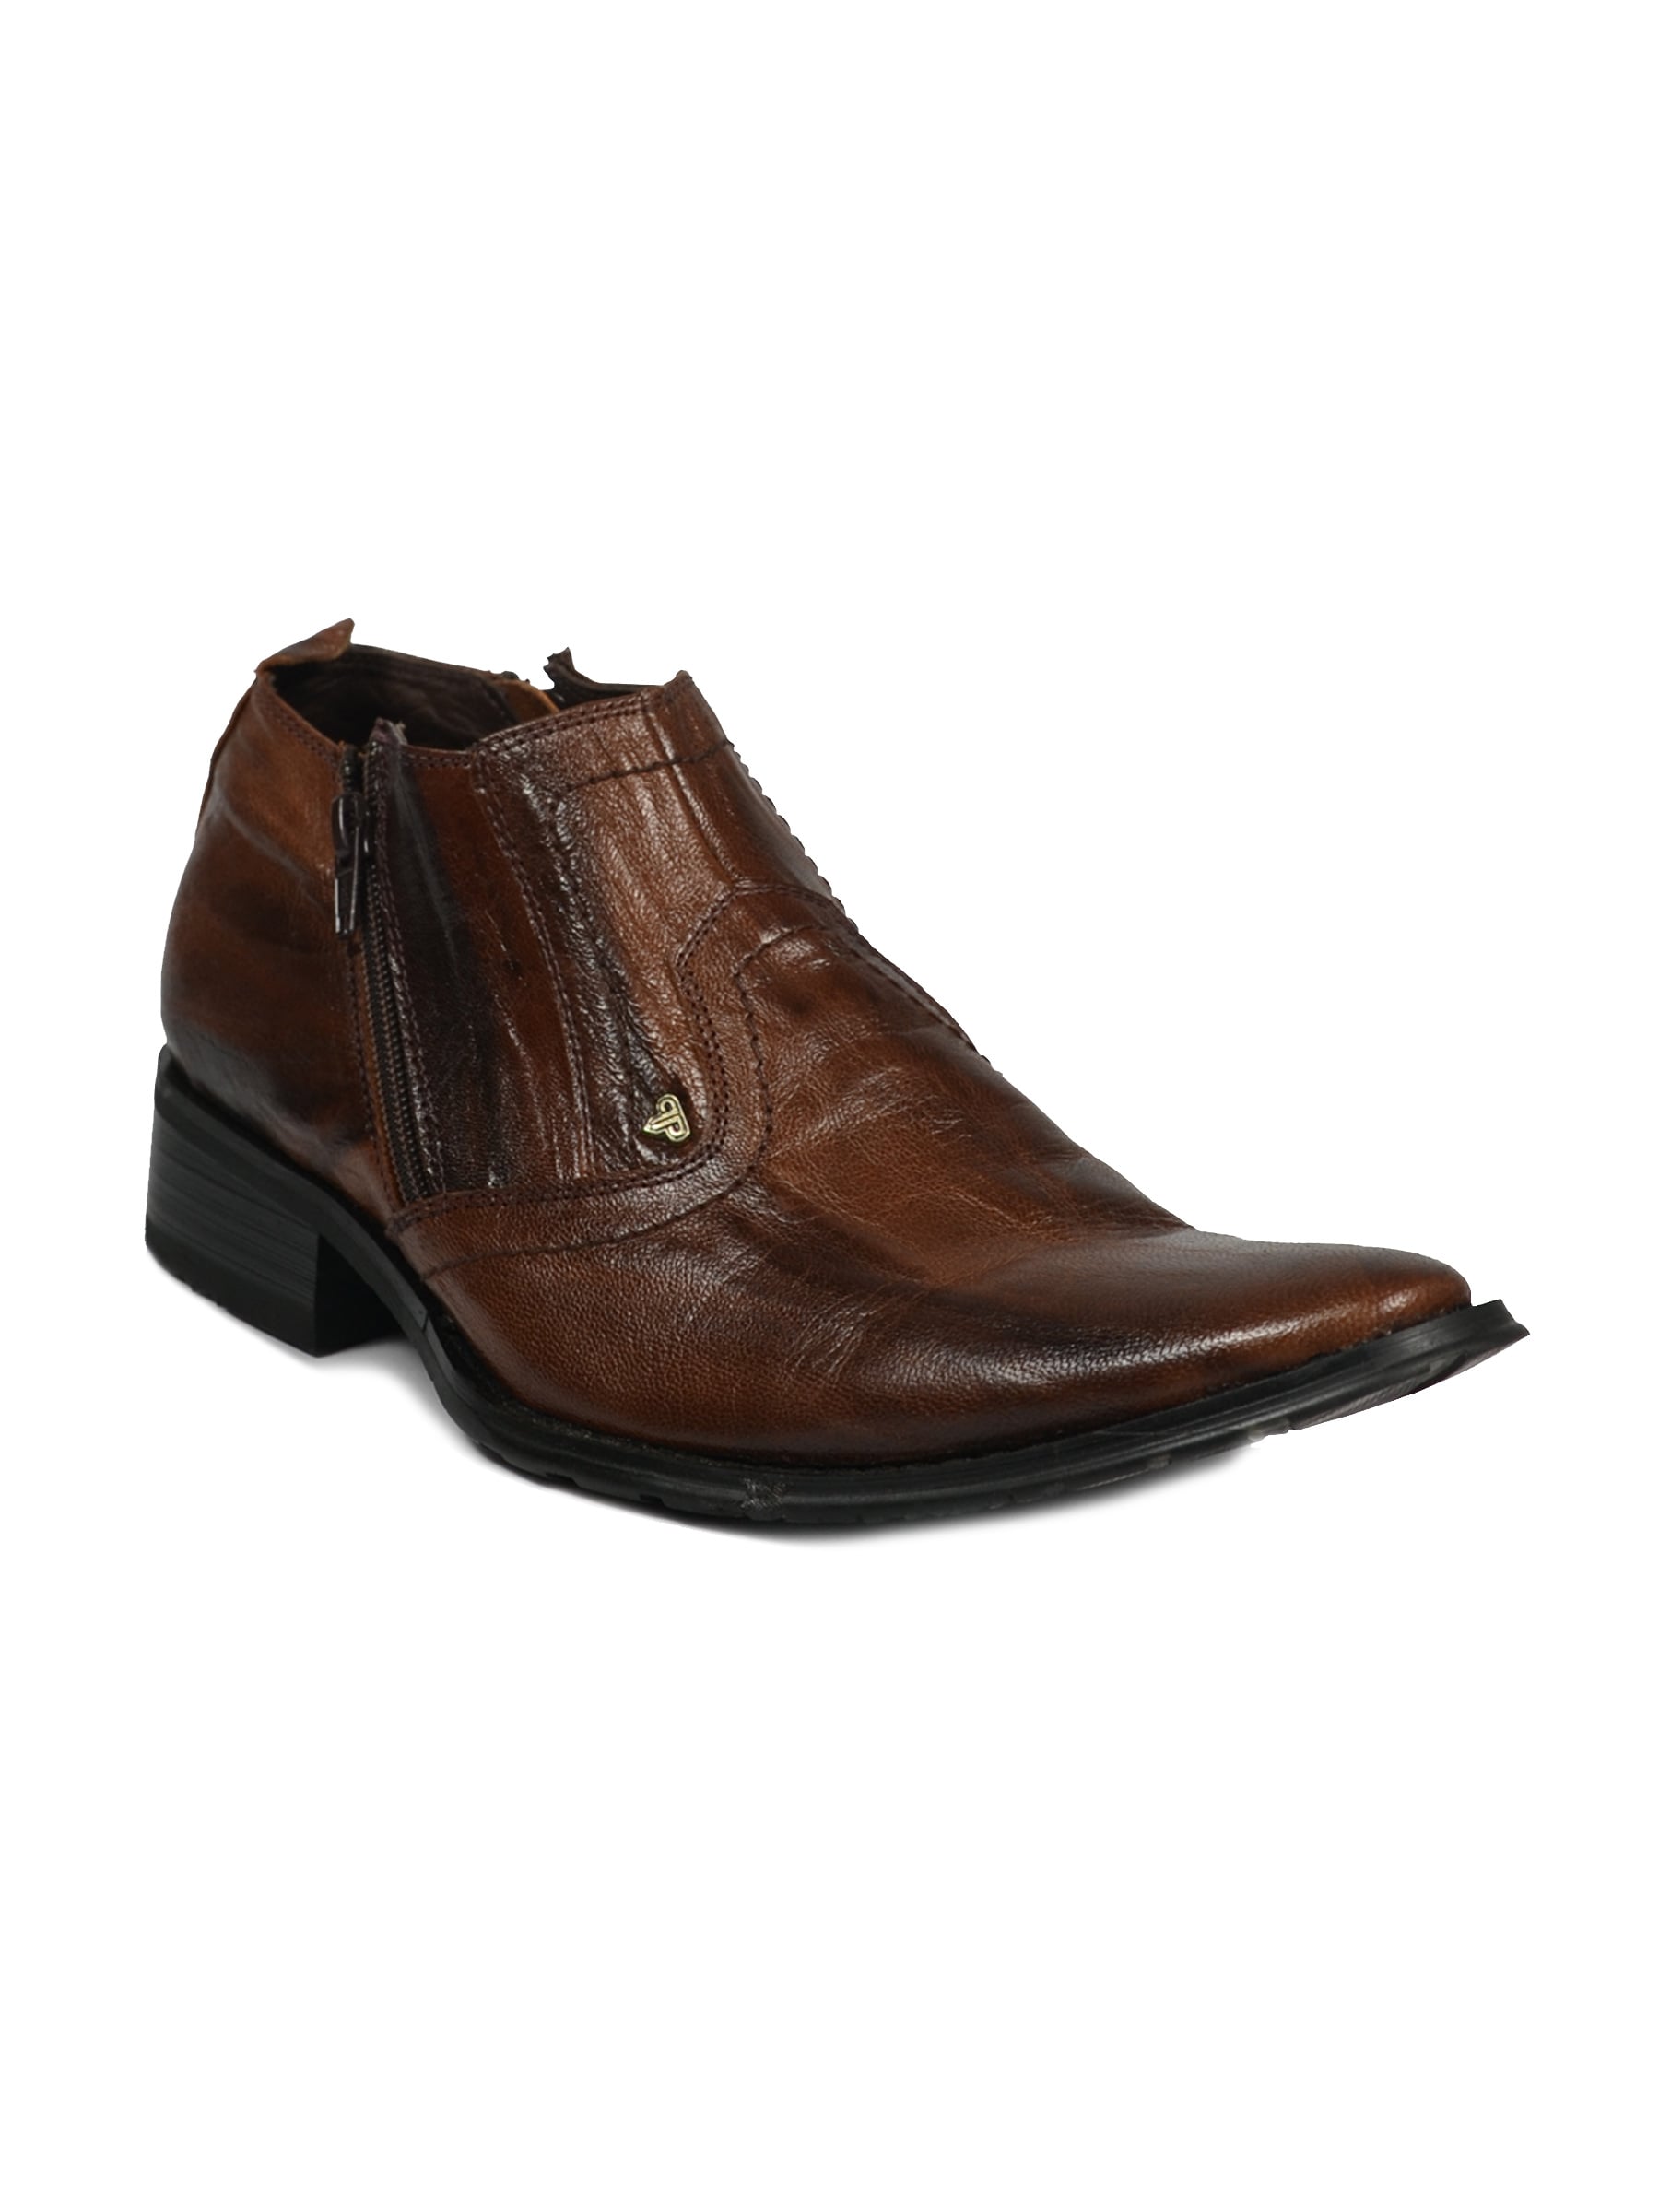 Provogue Men's Formal Brown Shoe